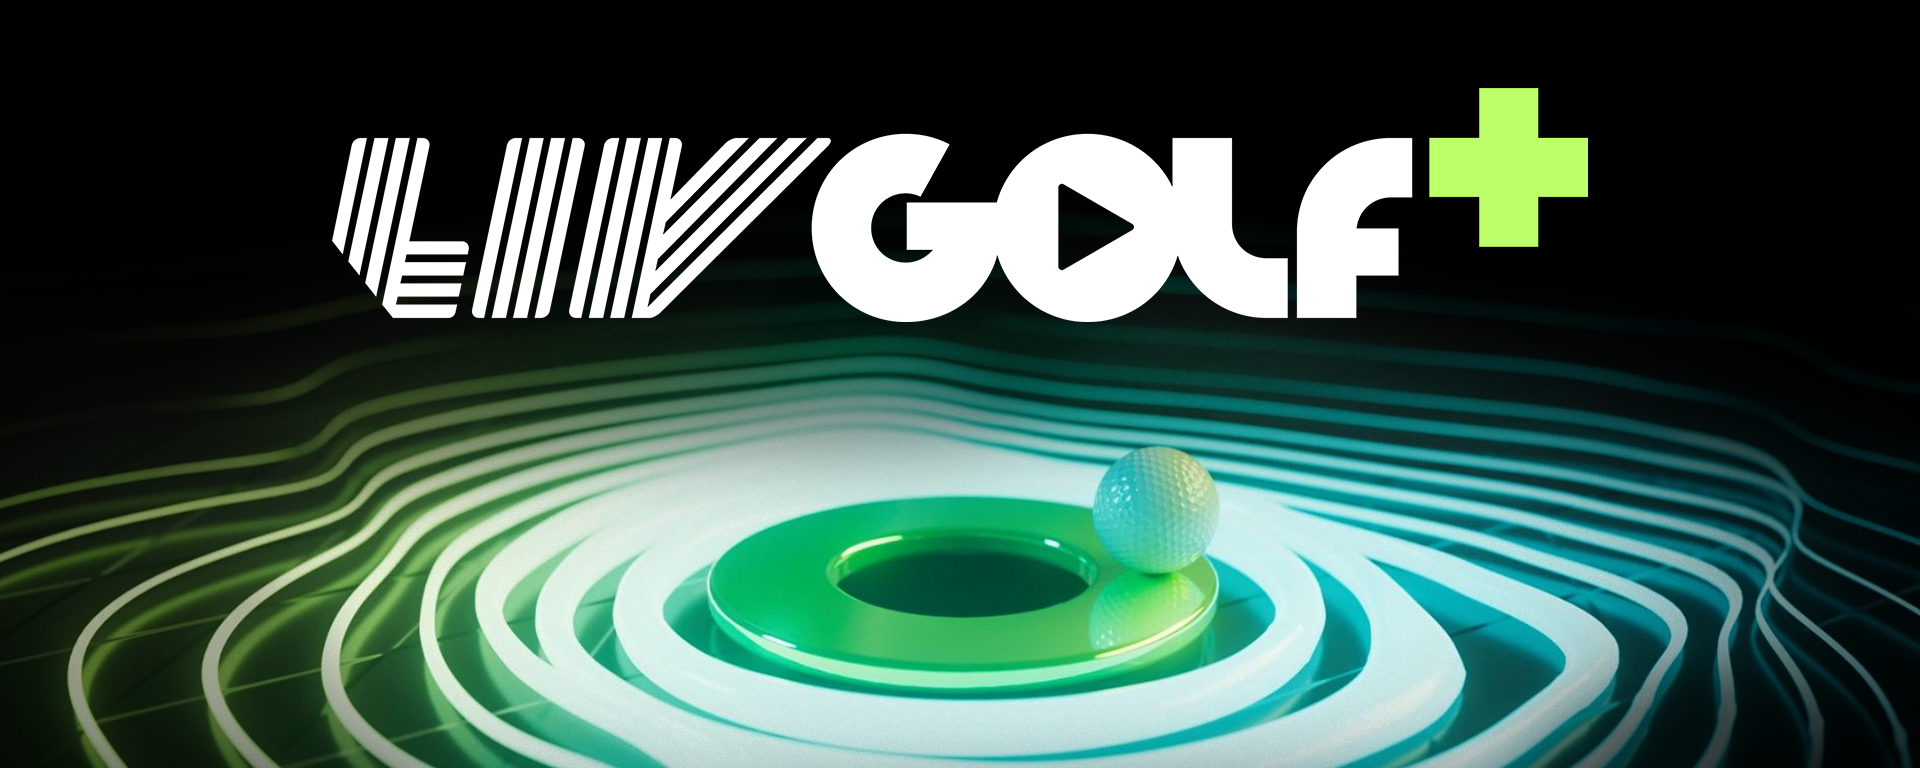 LIV Golf Plus تعلن عن إطلاق تطبيق جديد لبث مباريات الدوري